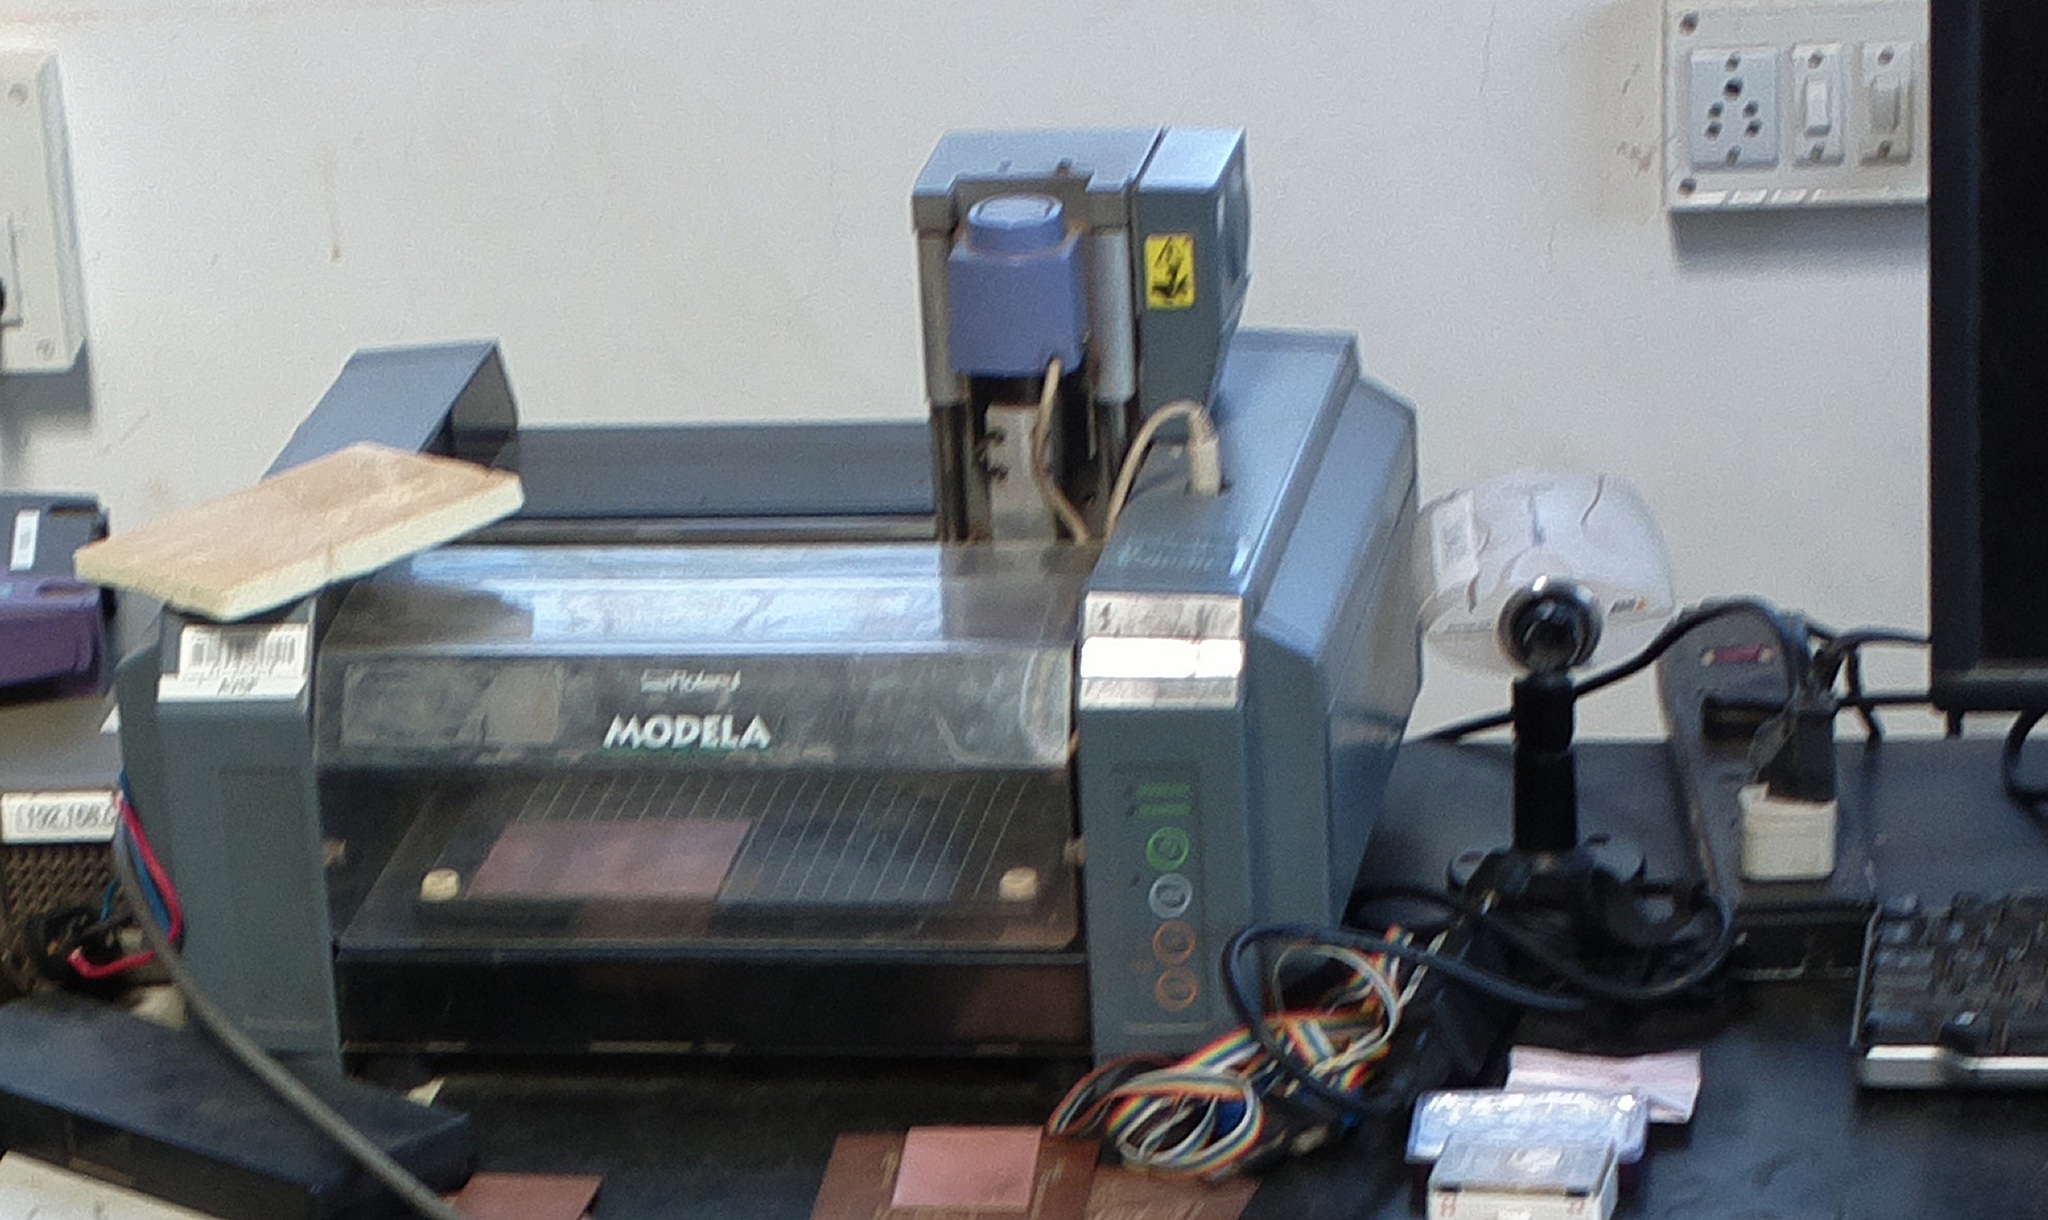 Roland MODELA MDX-20 3D scanning milling machine